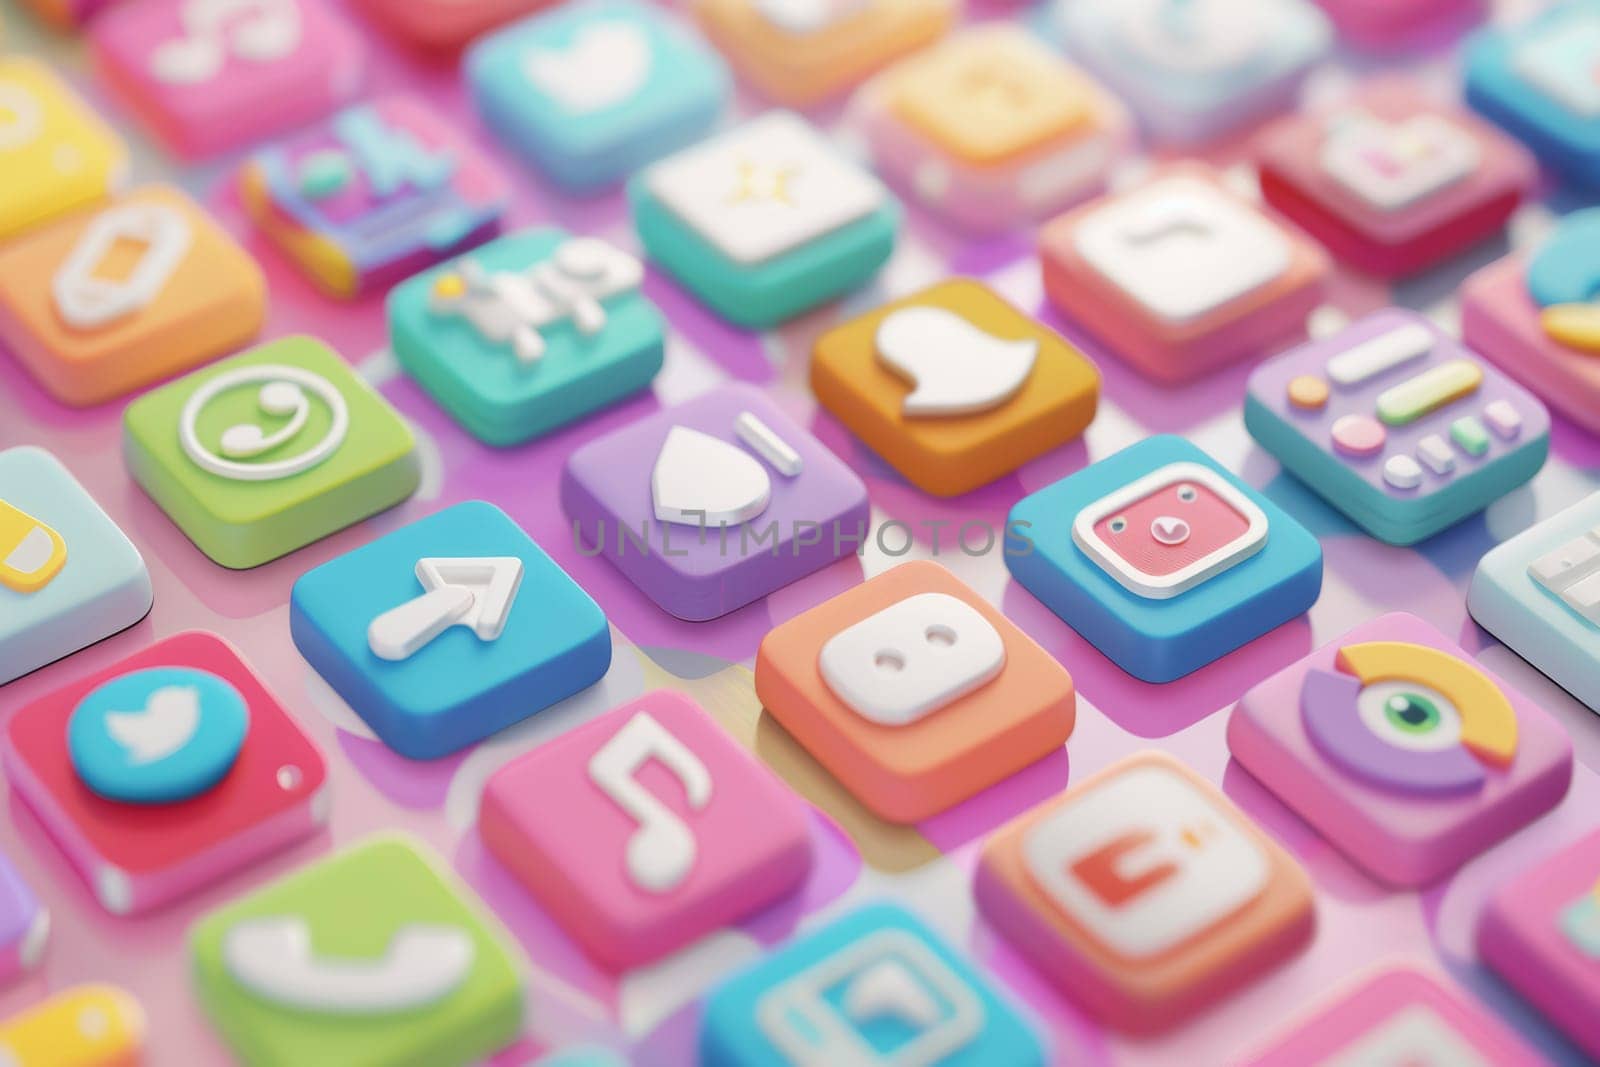 Vibrant Social Media Icons Display by andreyz